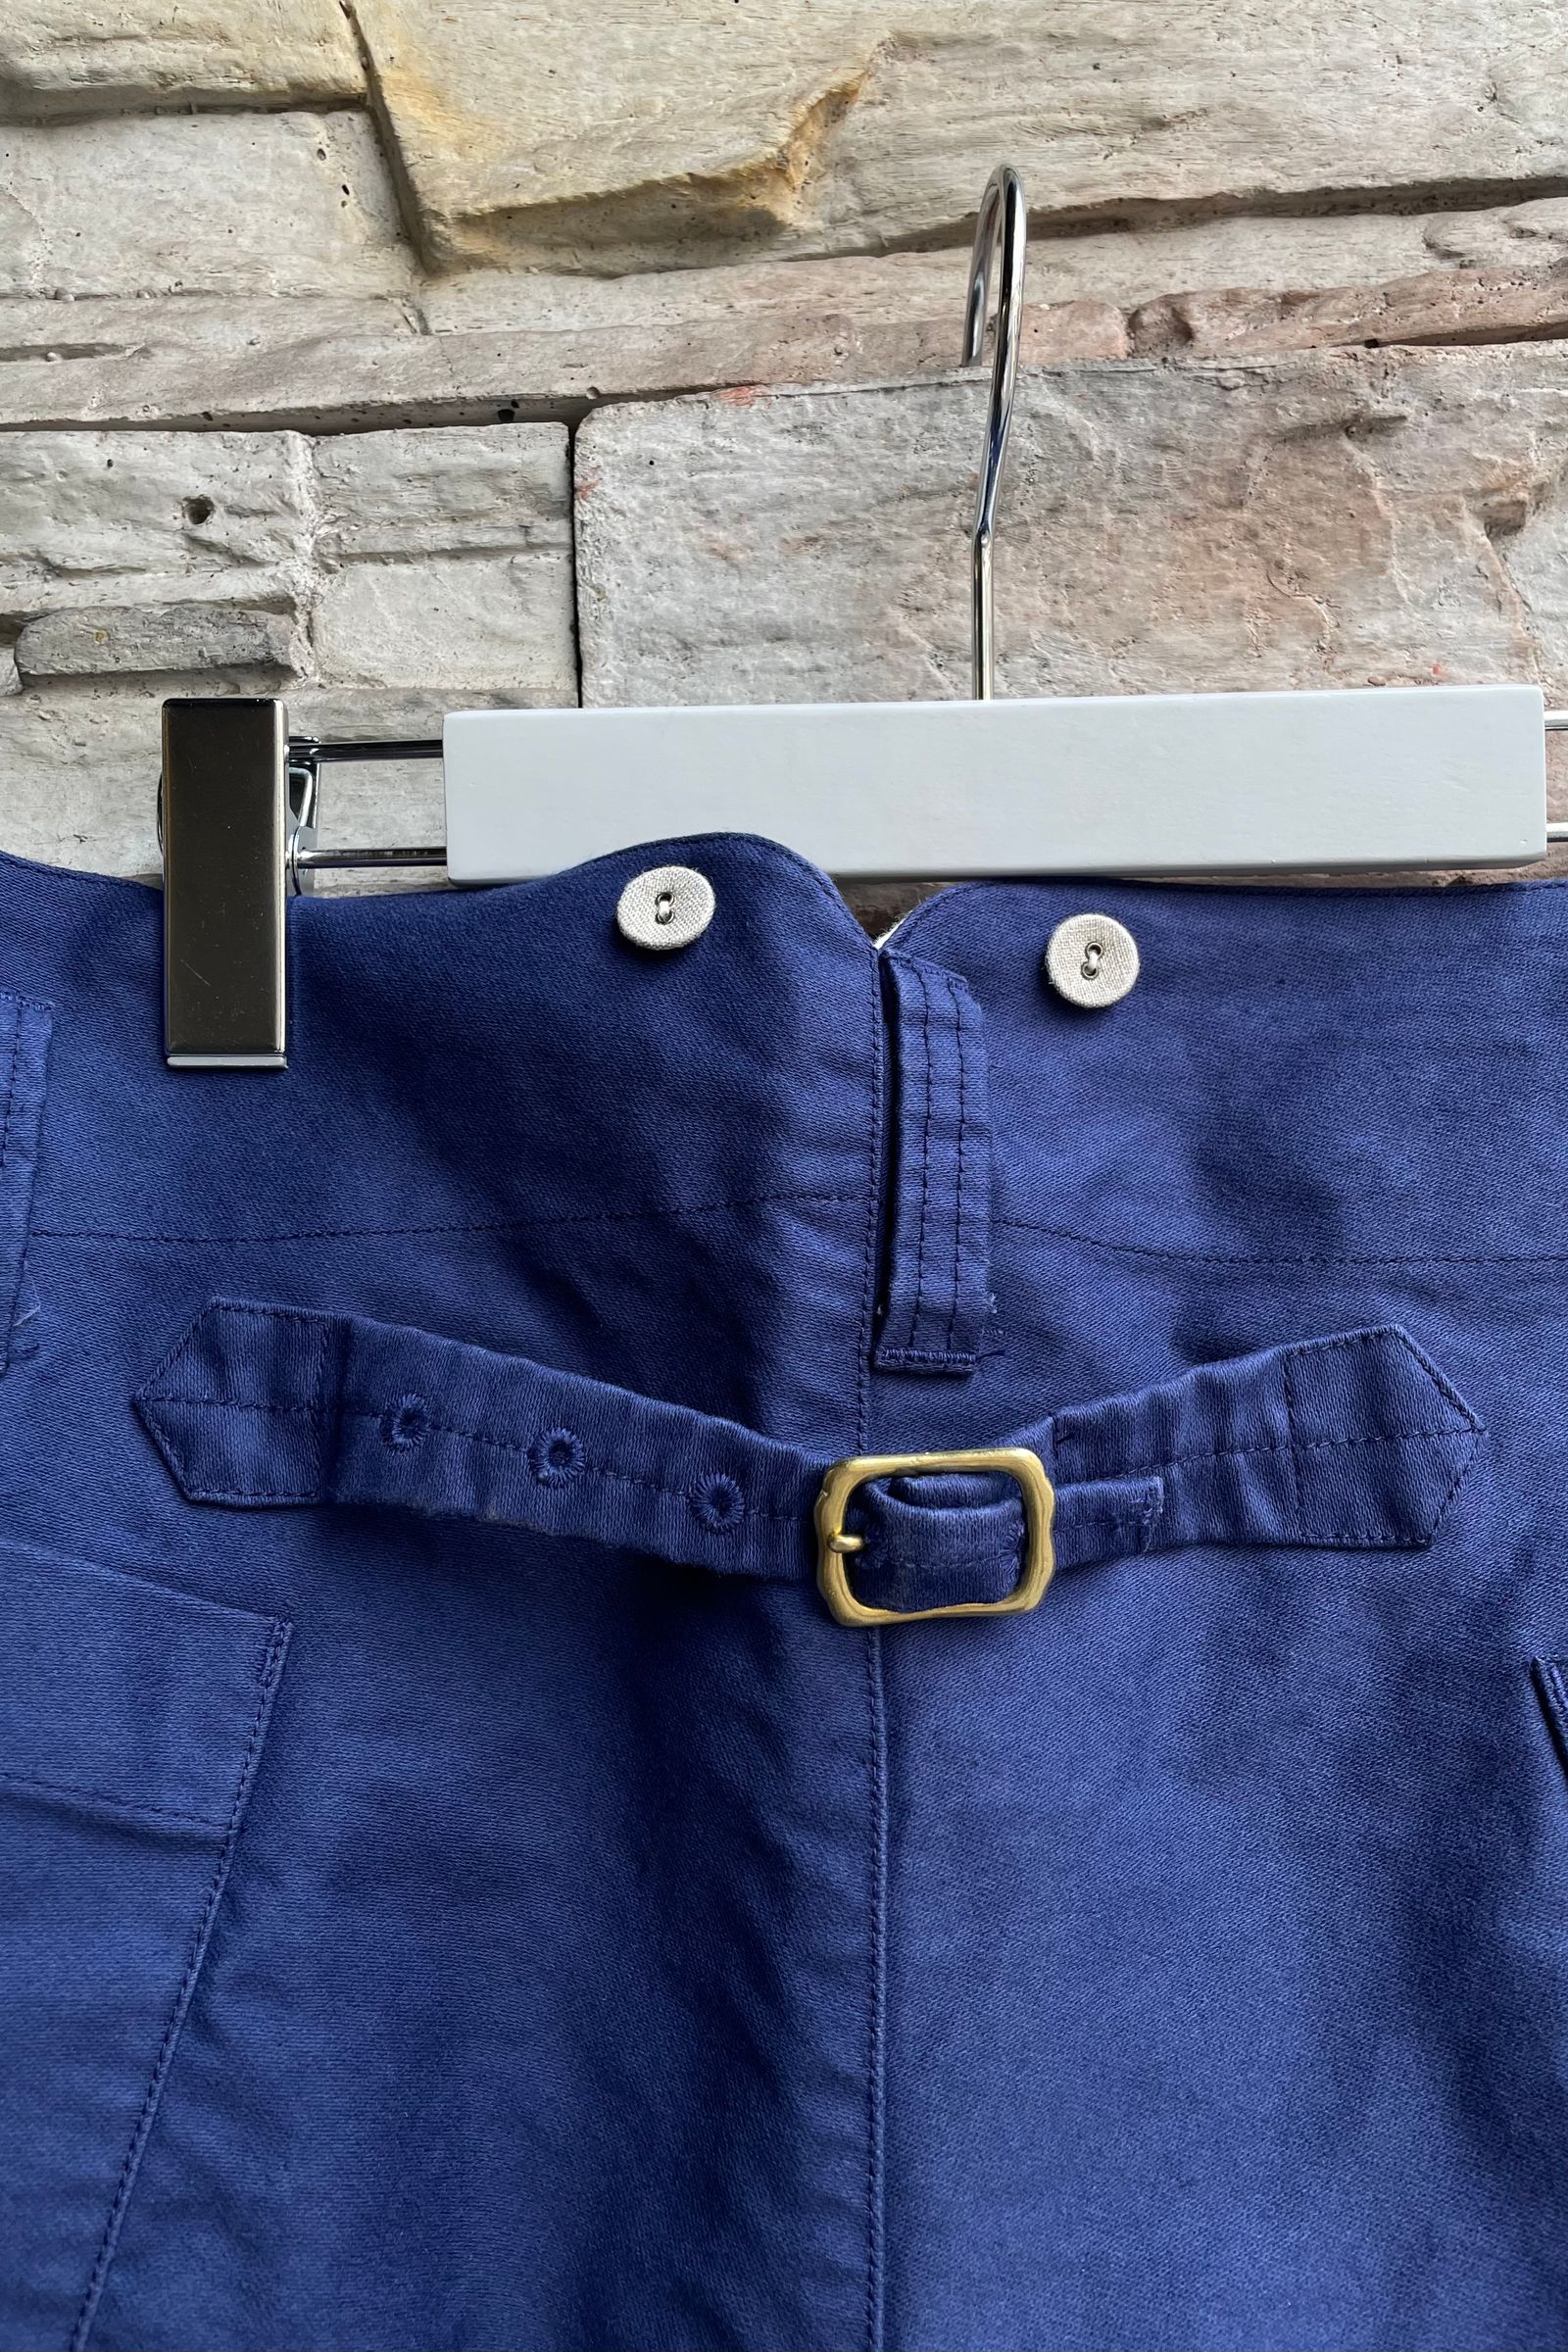 Gurank - Moleskin work trousers -blue- 23aw | asterisk